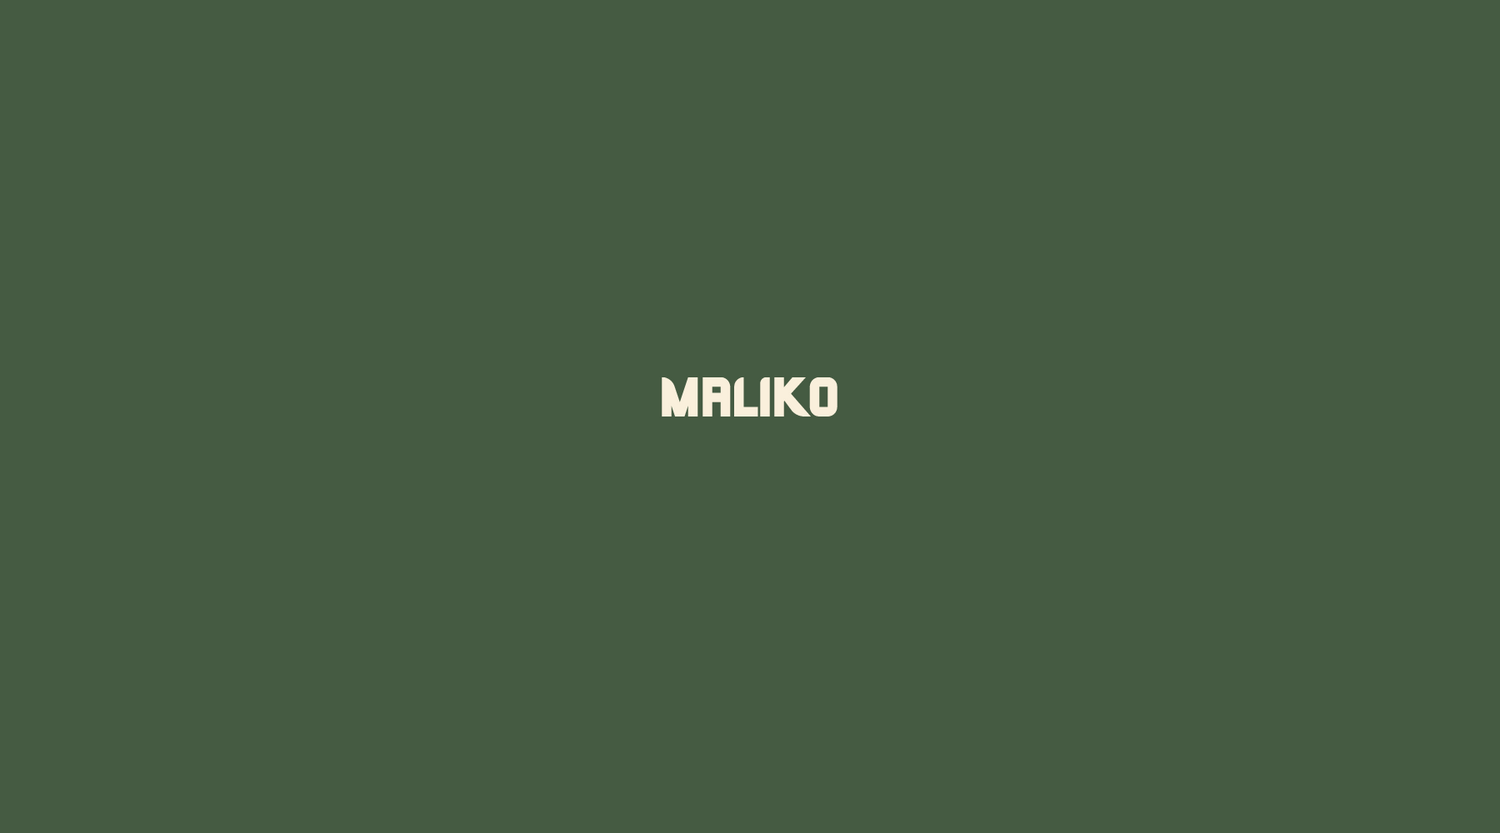 activewear for dog walking and outdoor adventures – MALIKO